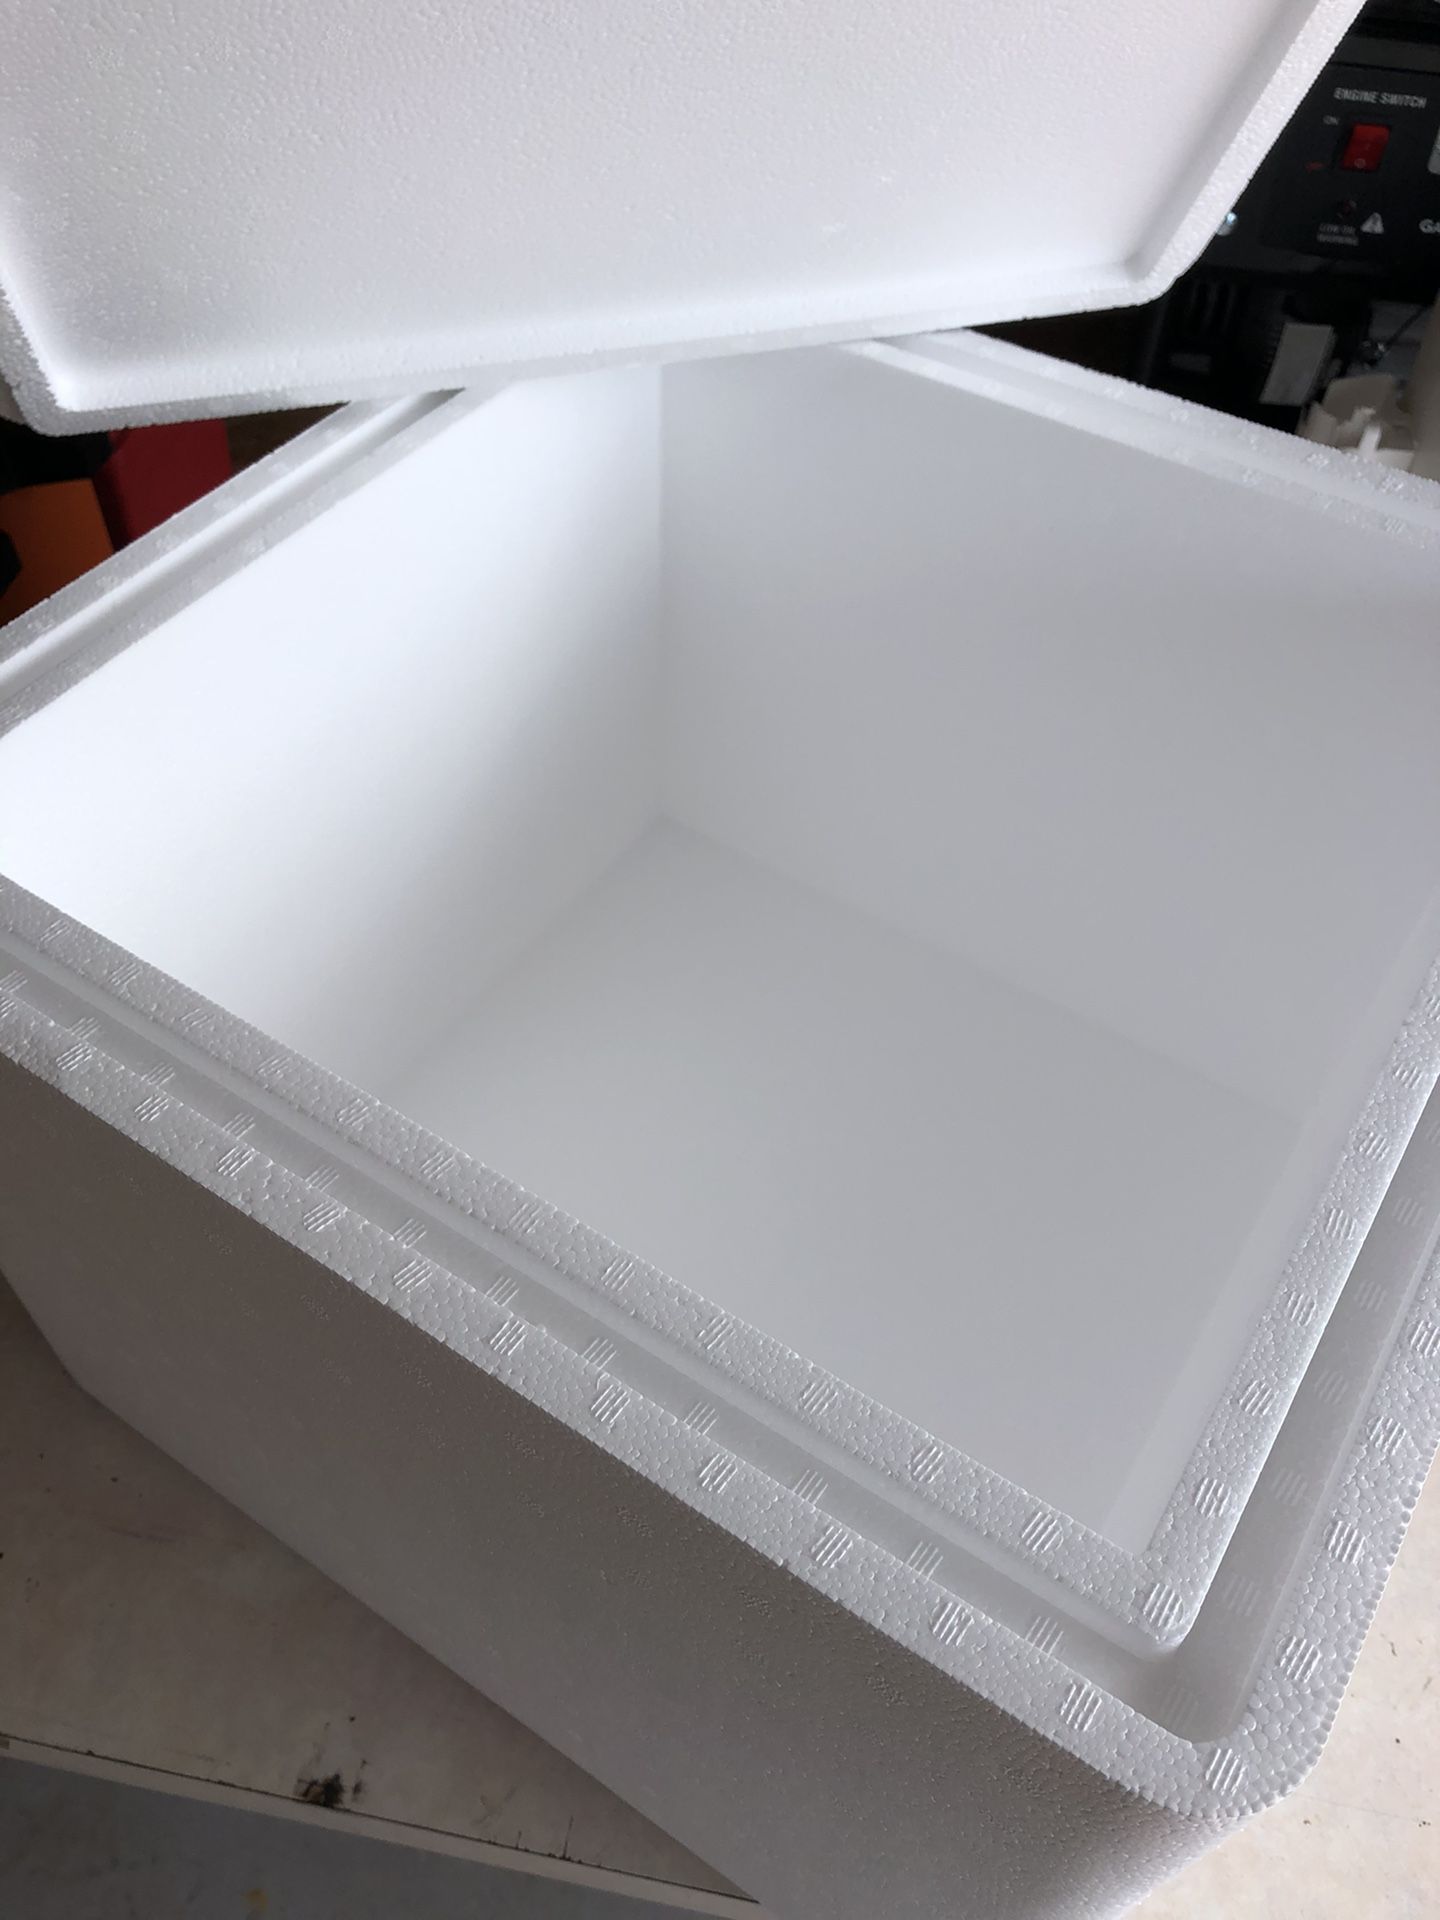 Styrofoam coolers